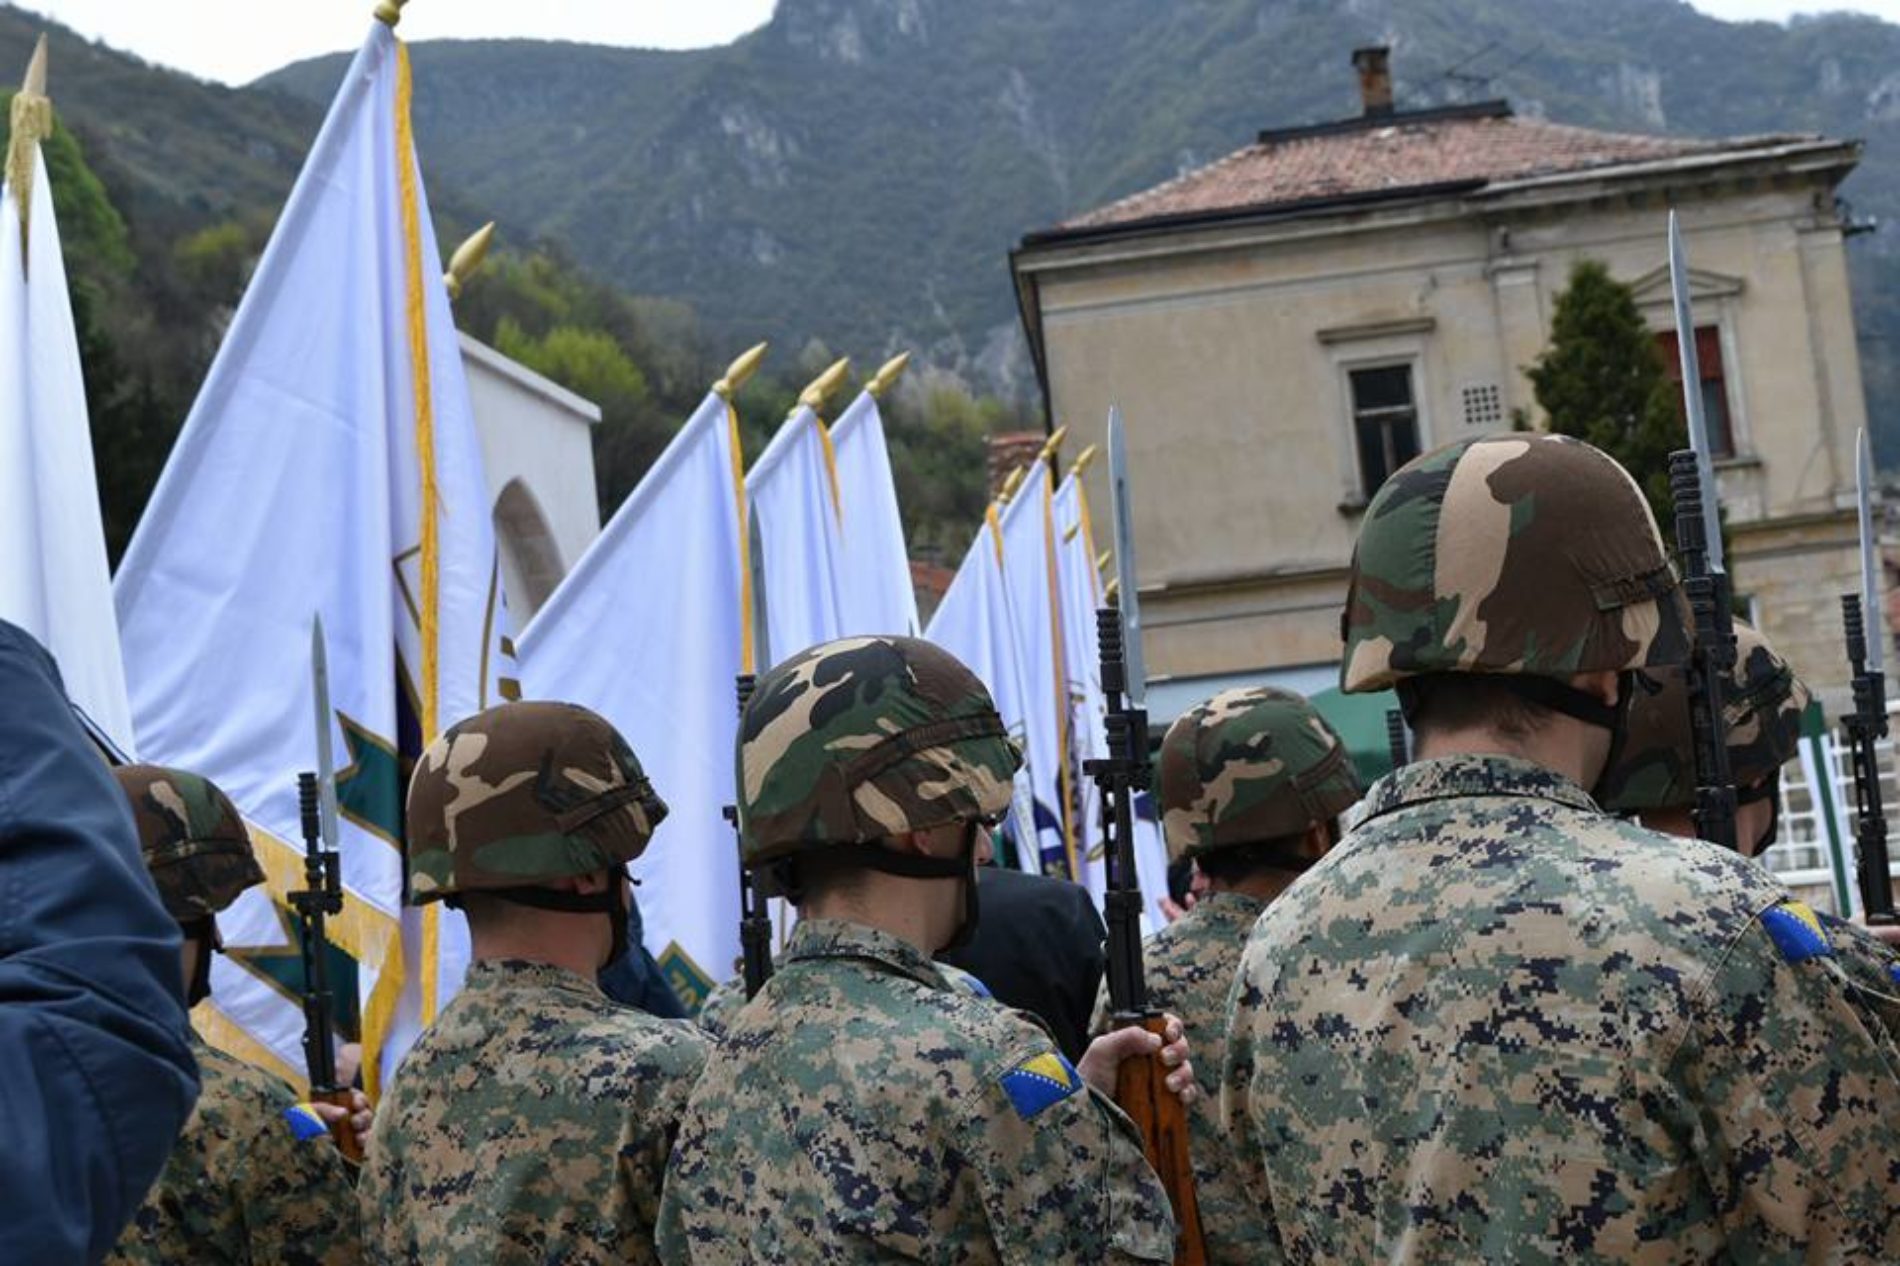 Održana svečanost u povodu obilježavanja 22. godišnjice formiranja 7. korpusa ARBiH (Foto/Video)